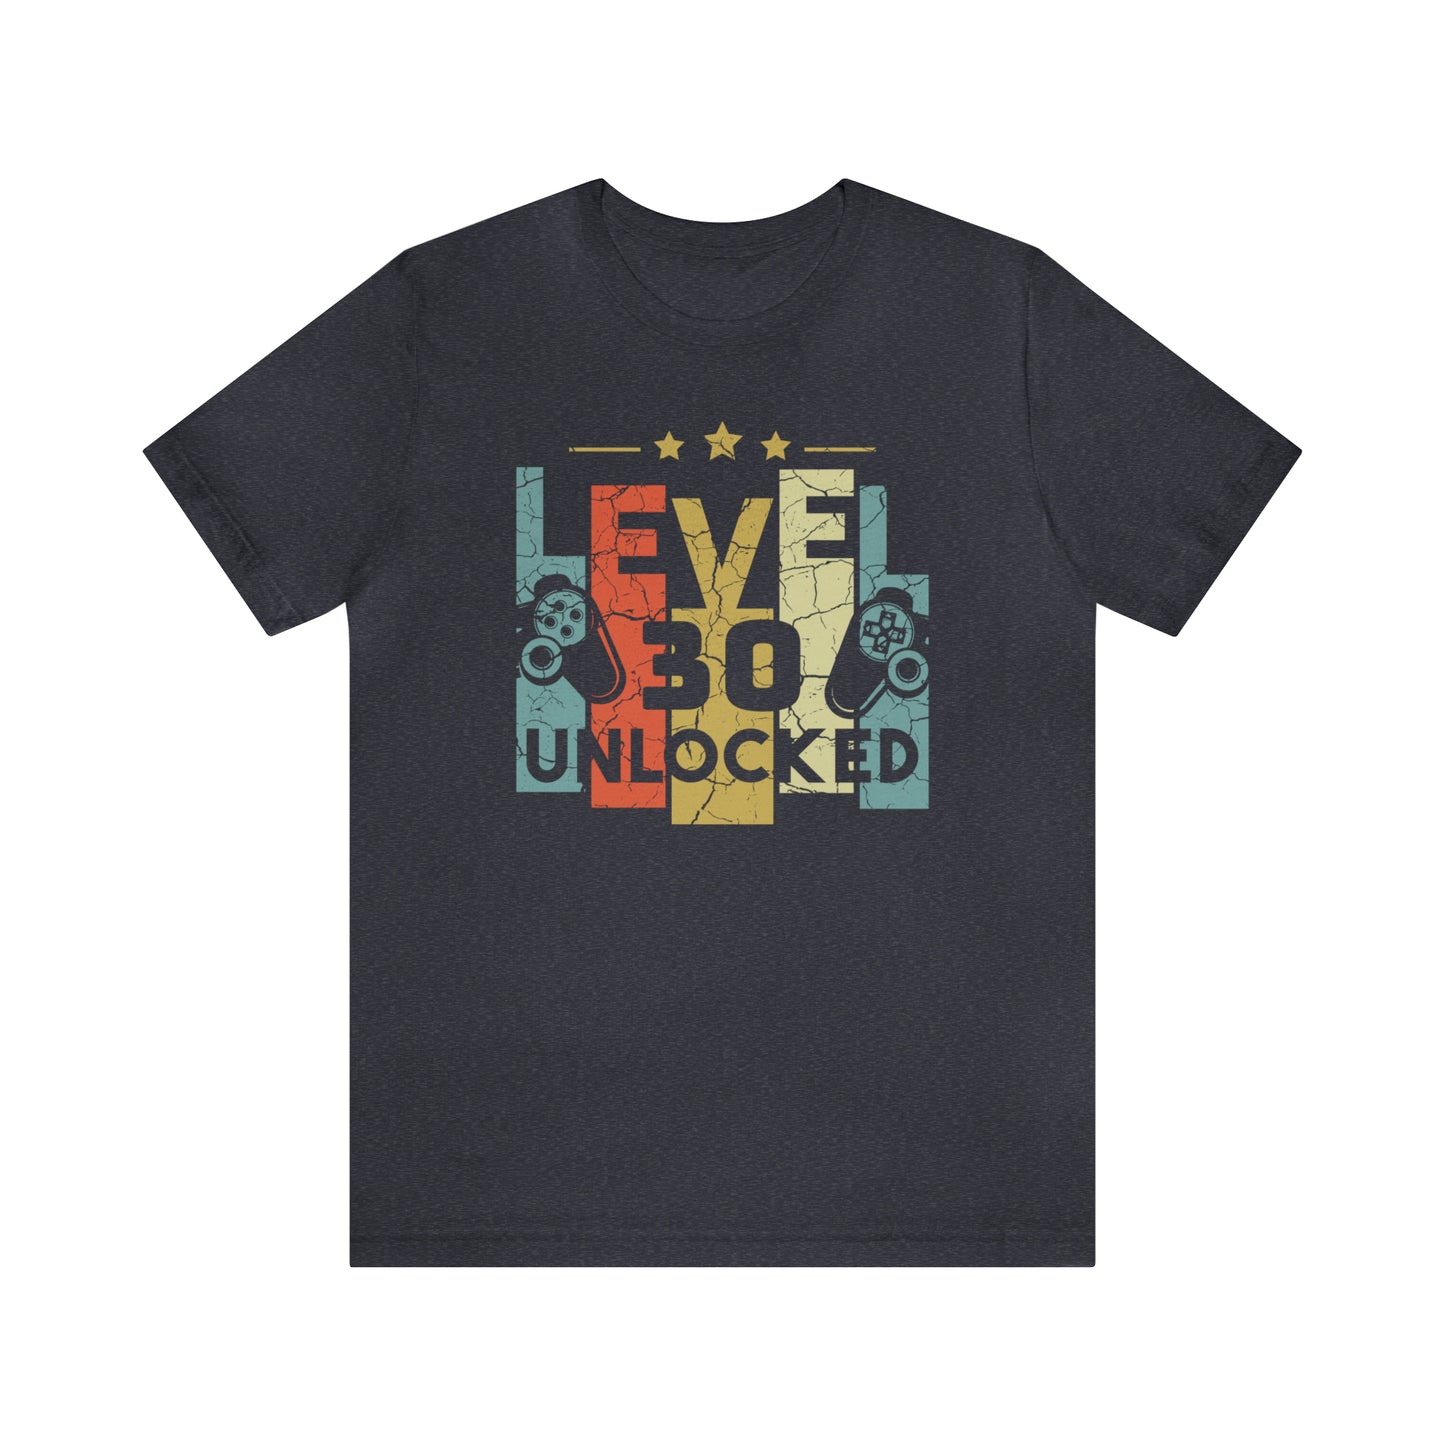 30th Birthday Gift for men or brother, Level 30 Unlocked Funny Gamer Shirt for son or boyfriend